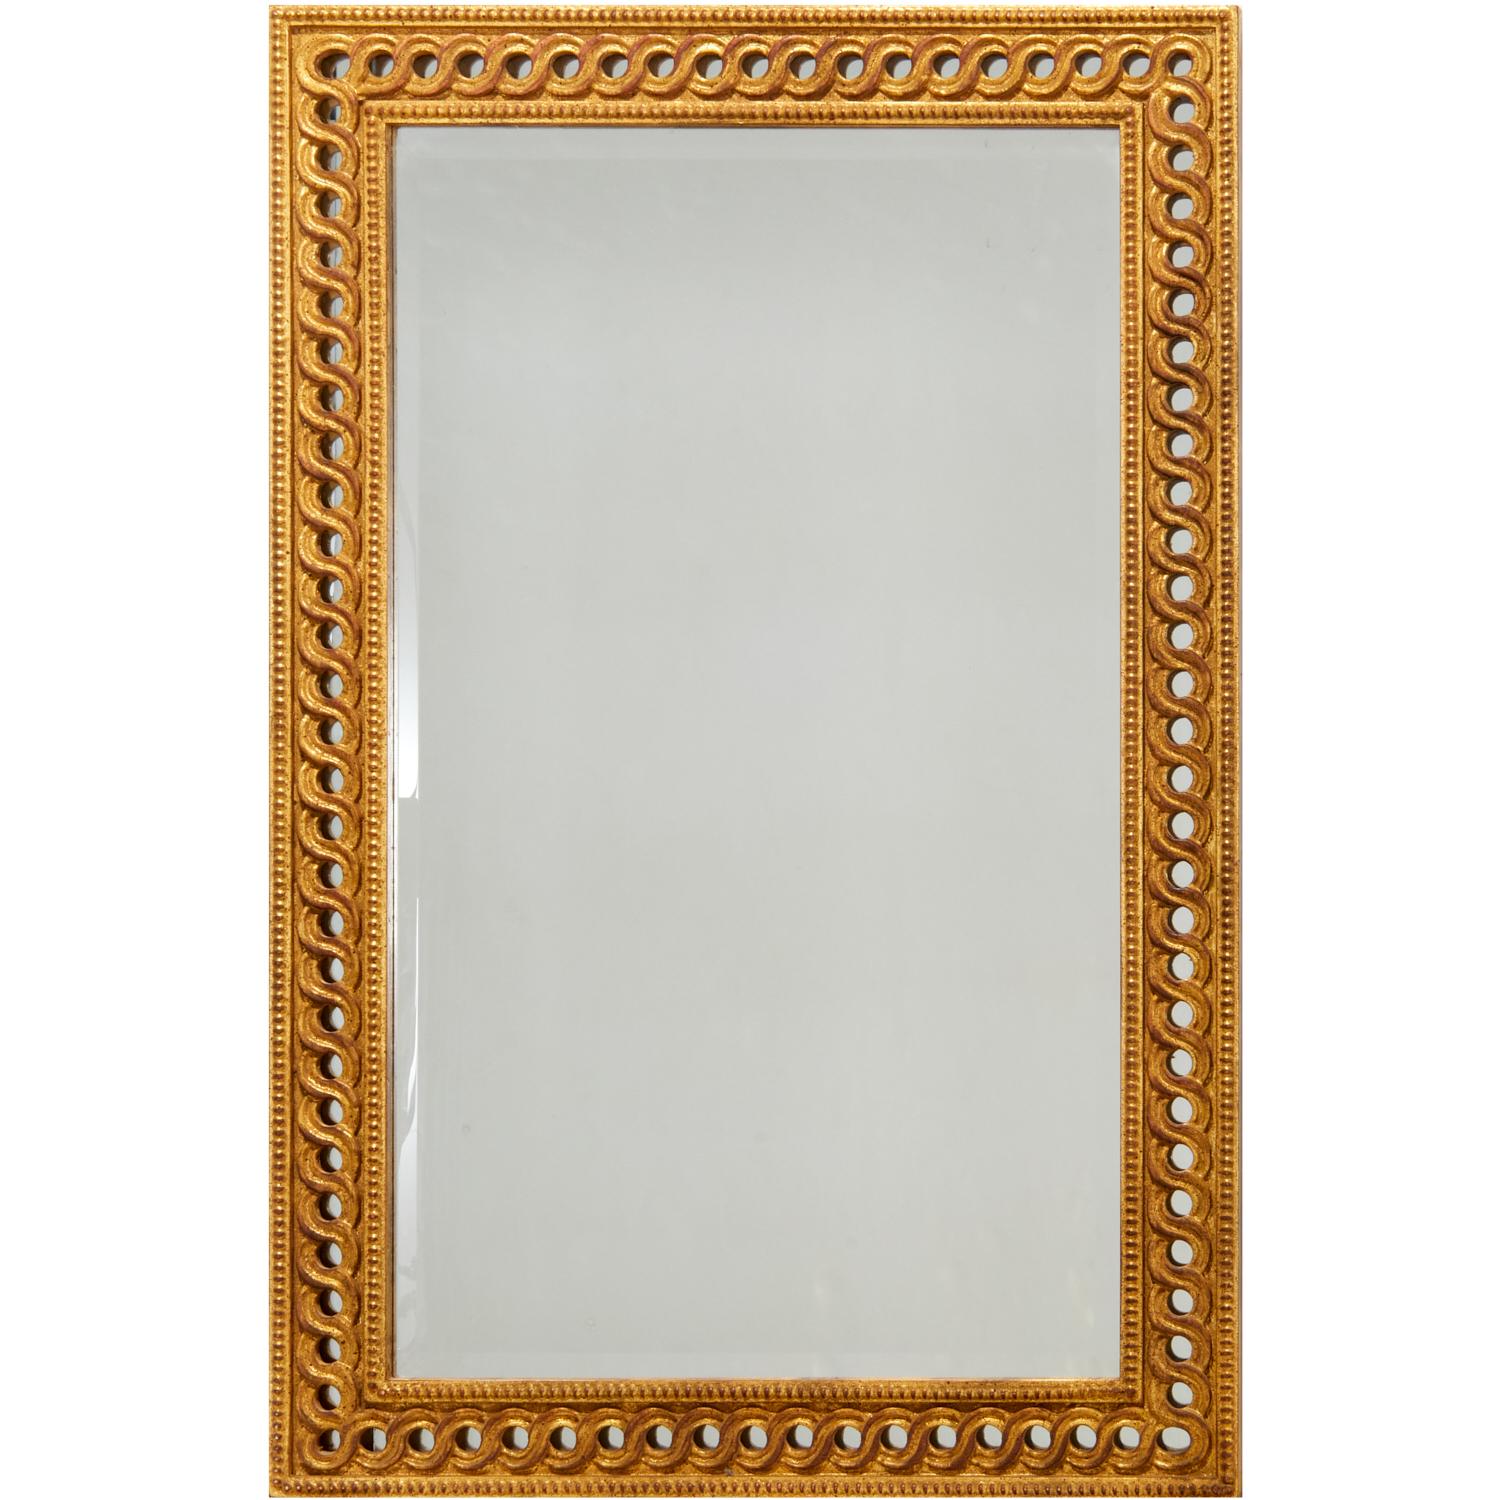 Contemporary 21st C., Unusual Rectangular Wall Mirror, Pierced Gilt Frame Over Beveled Glass